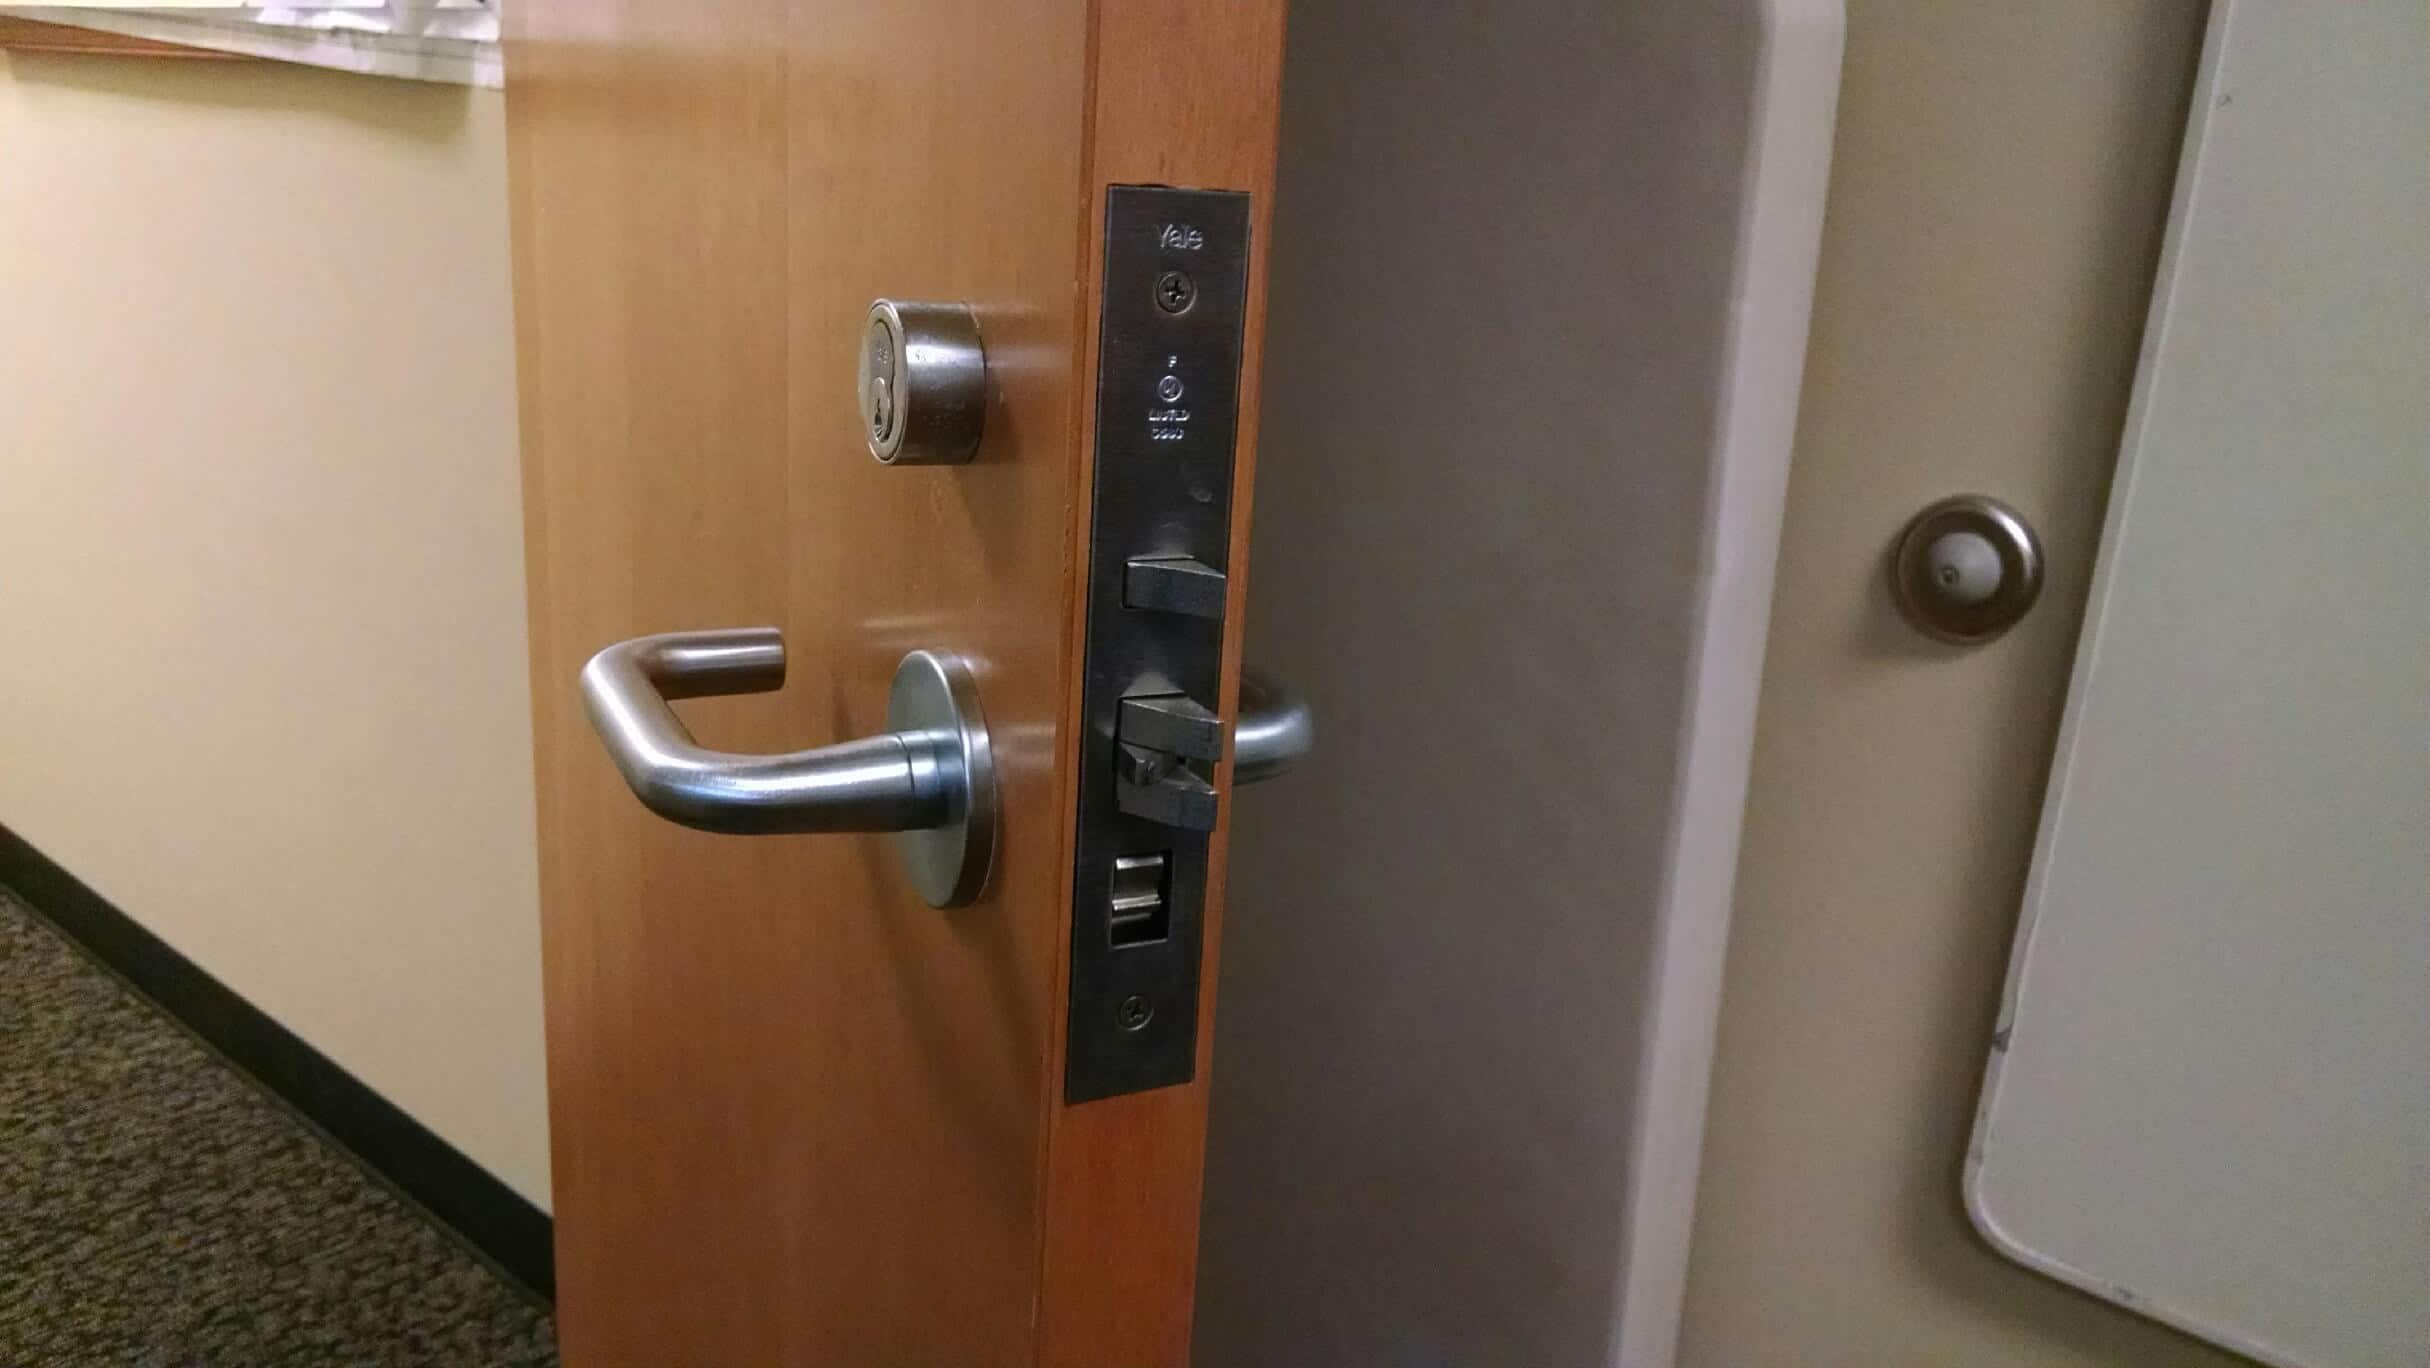 schlage keypad lock not locking